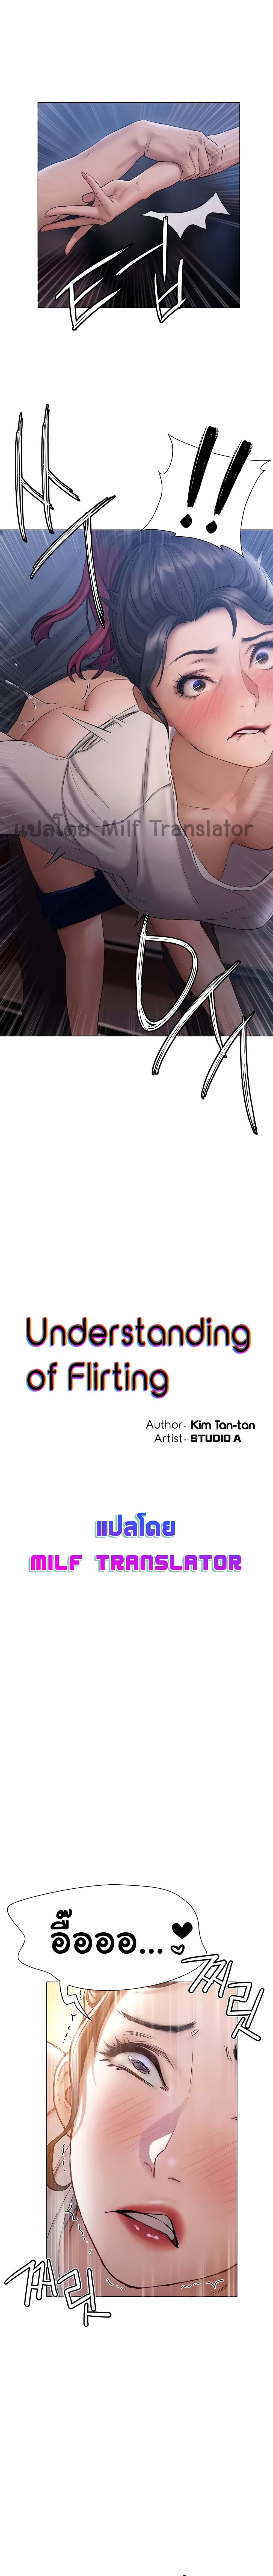 Understanding of Flirting 13 02